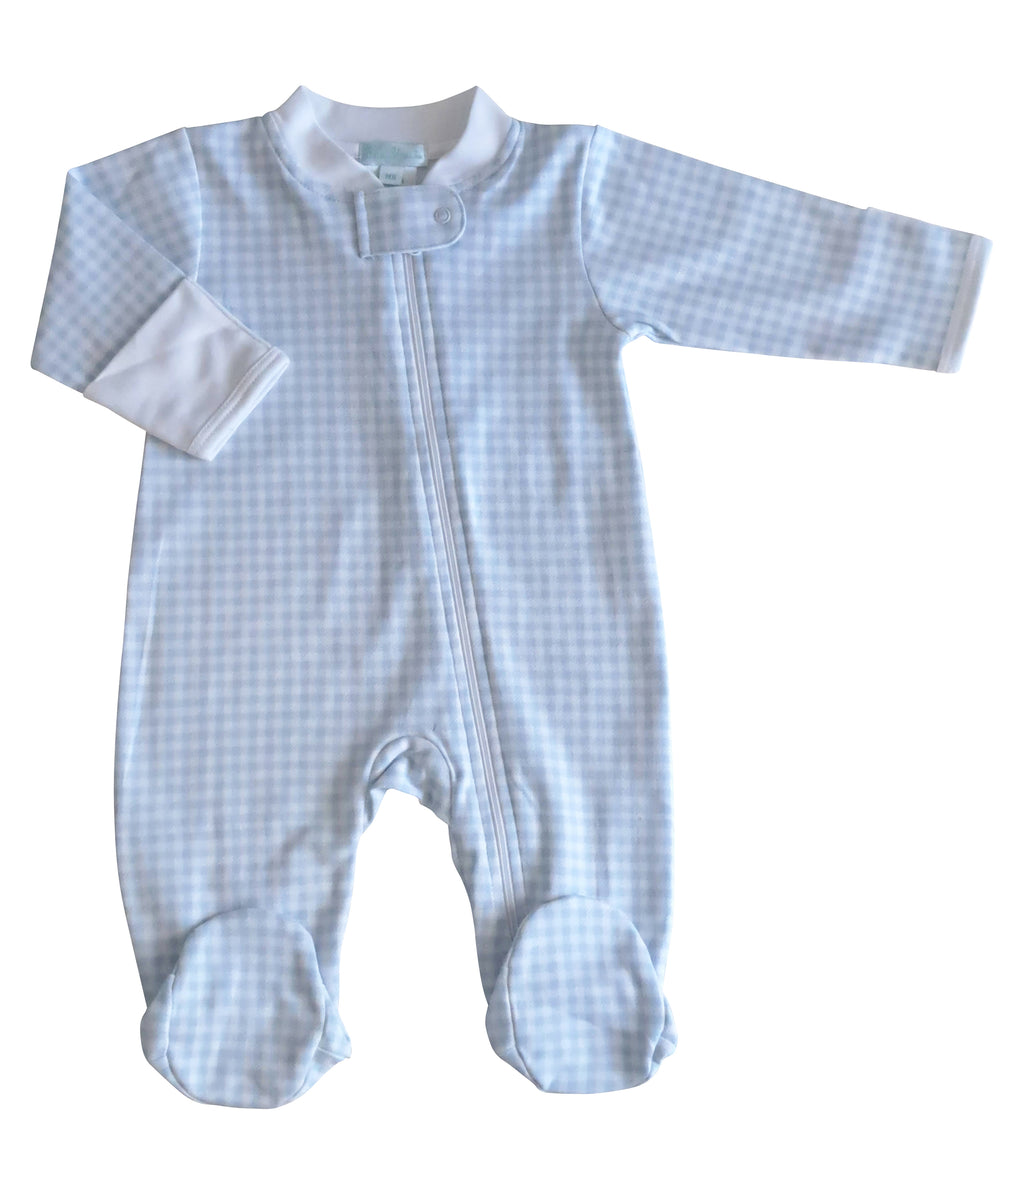 Baby Boy's "Blue Checks" Zipper Pima Cotton Footie - Little Threads Inc. Children's Clothing